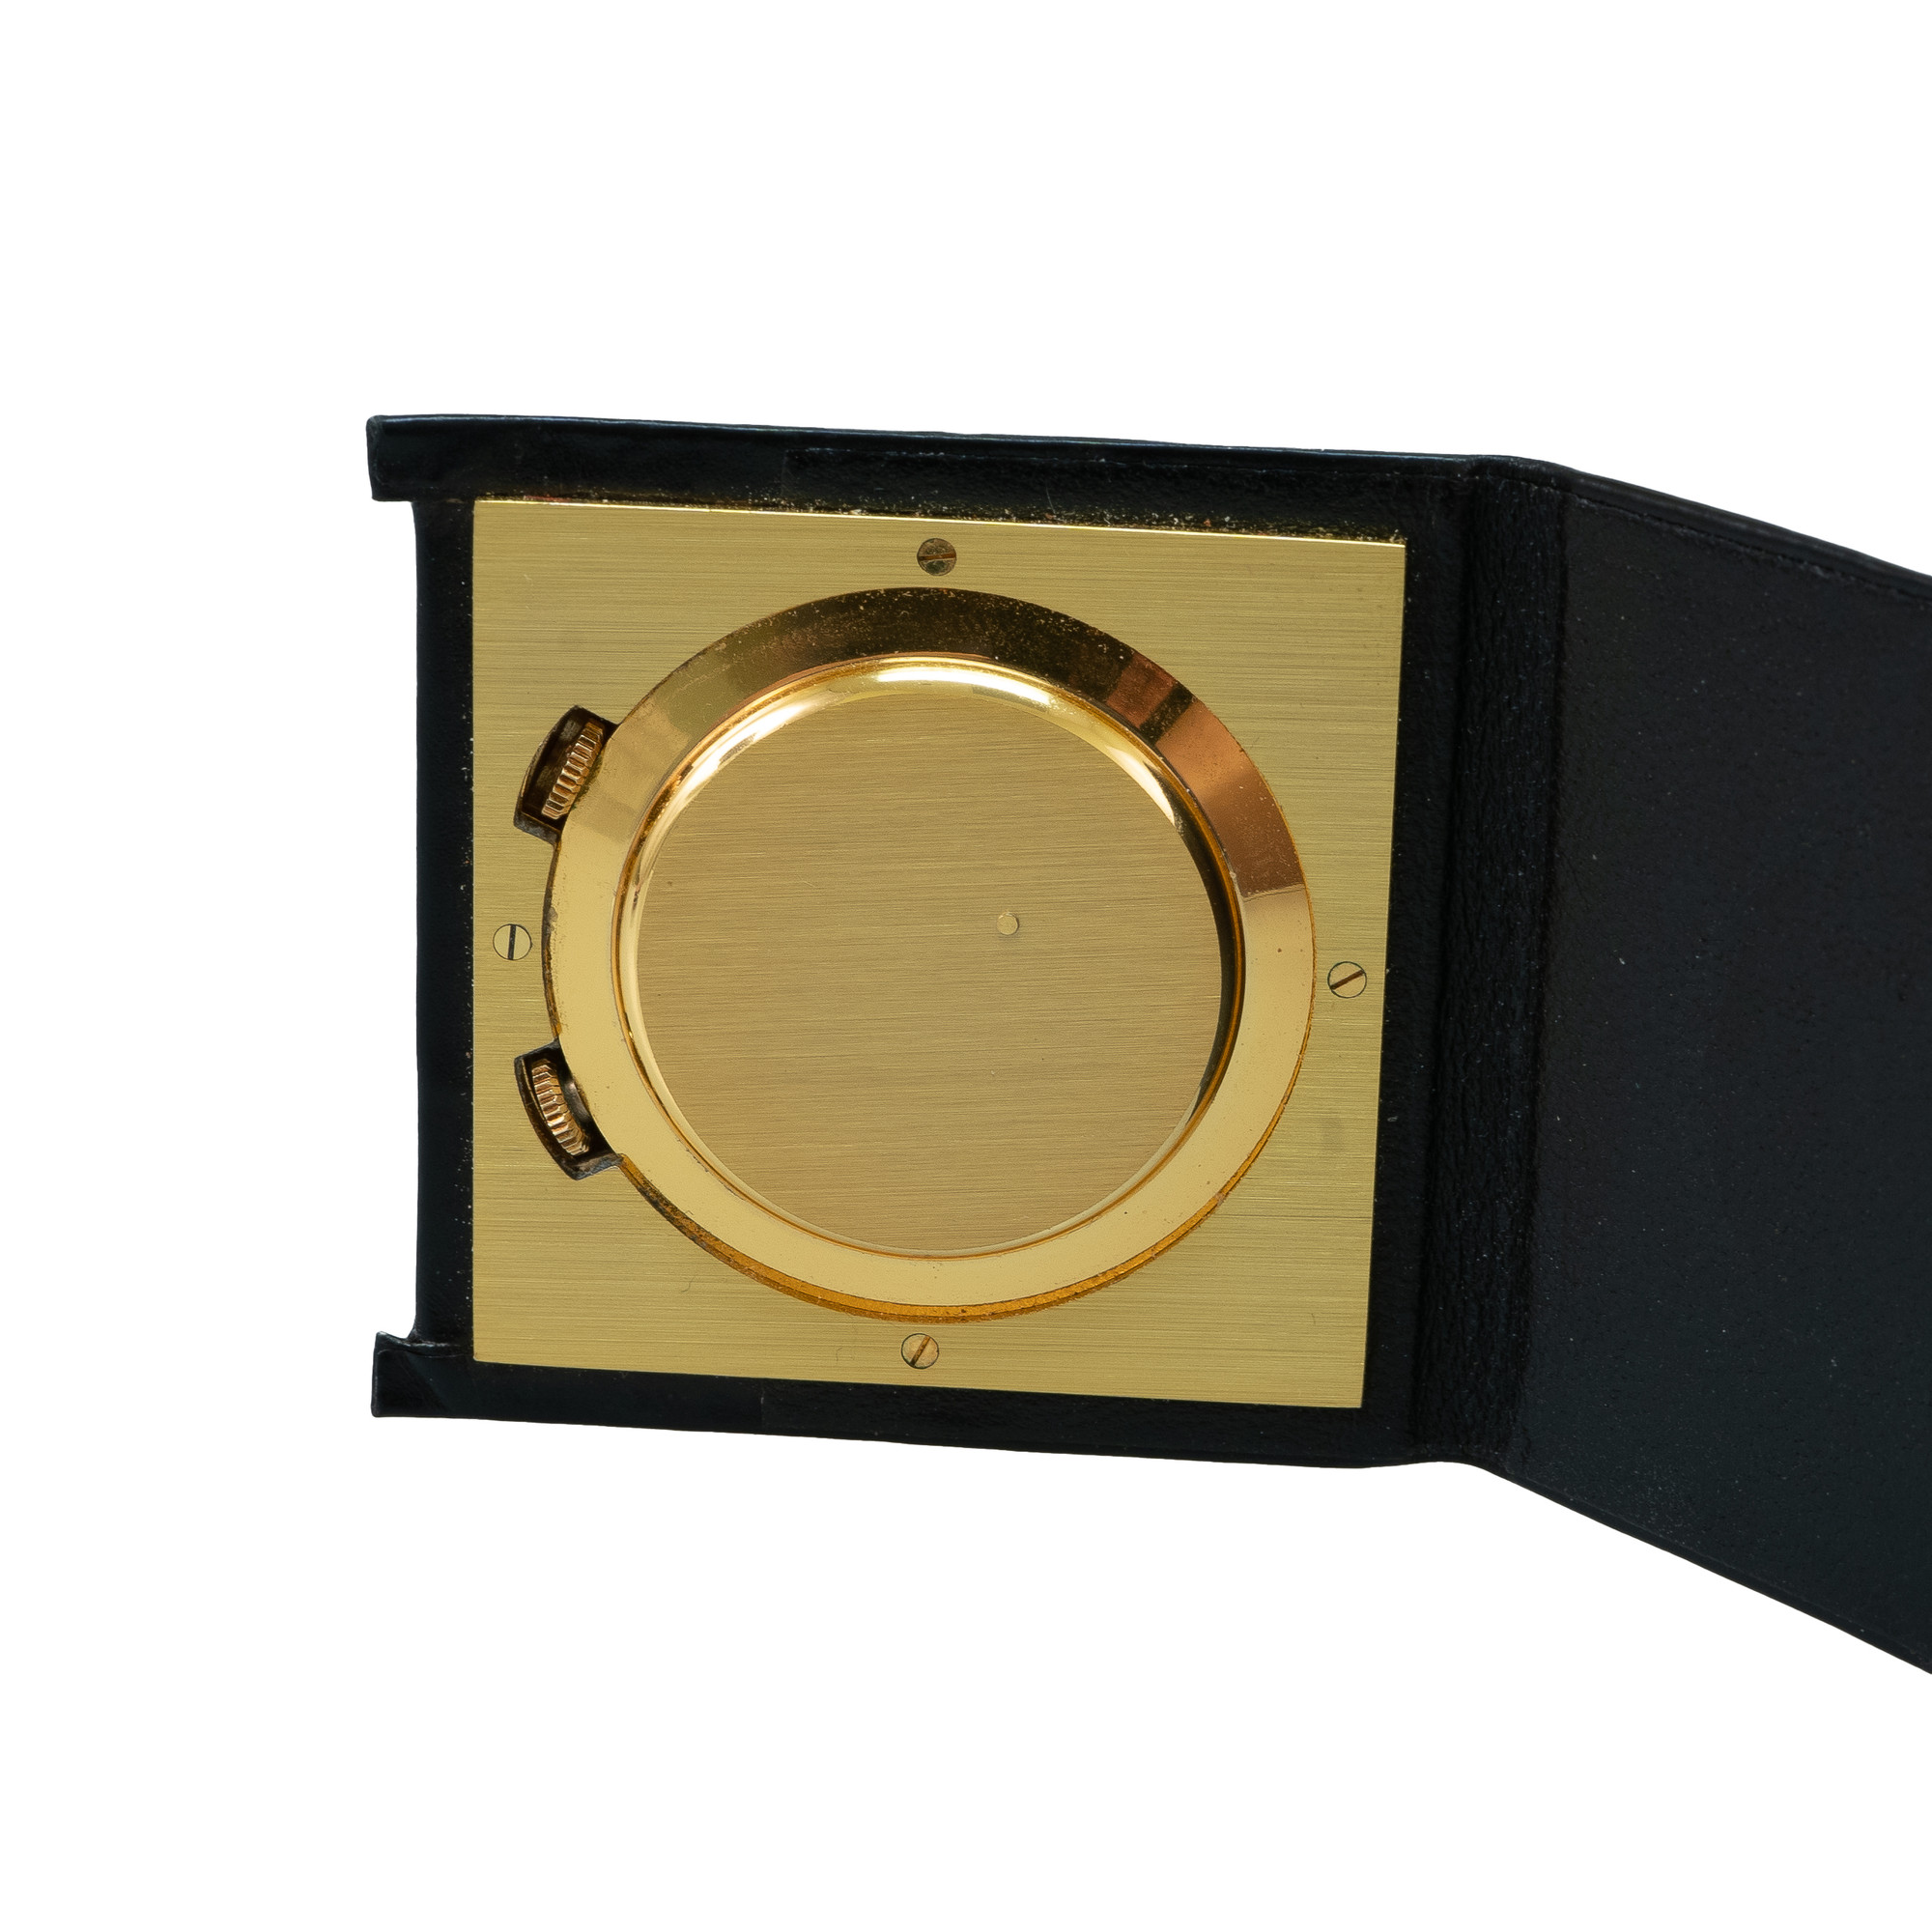 Jaeger LeCoultre Memodate Alarm Clock - Inventory 5016